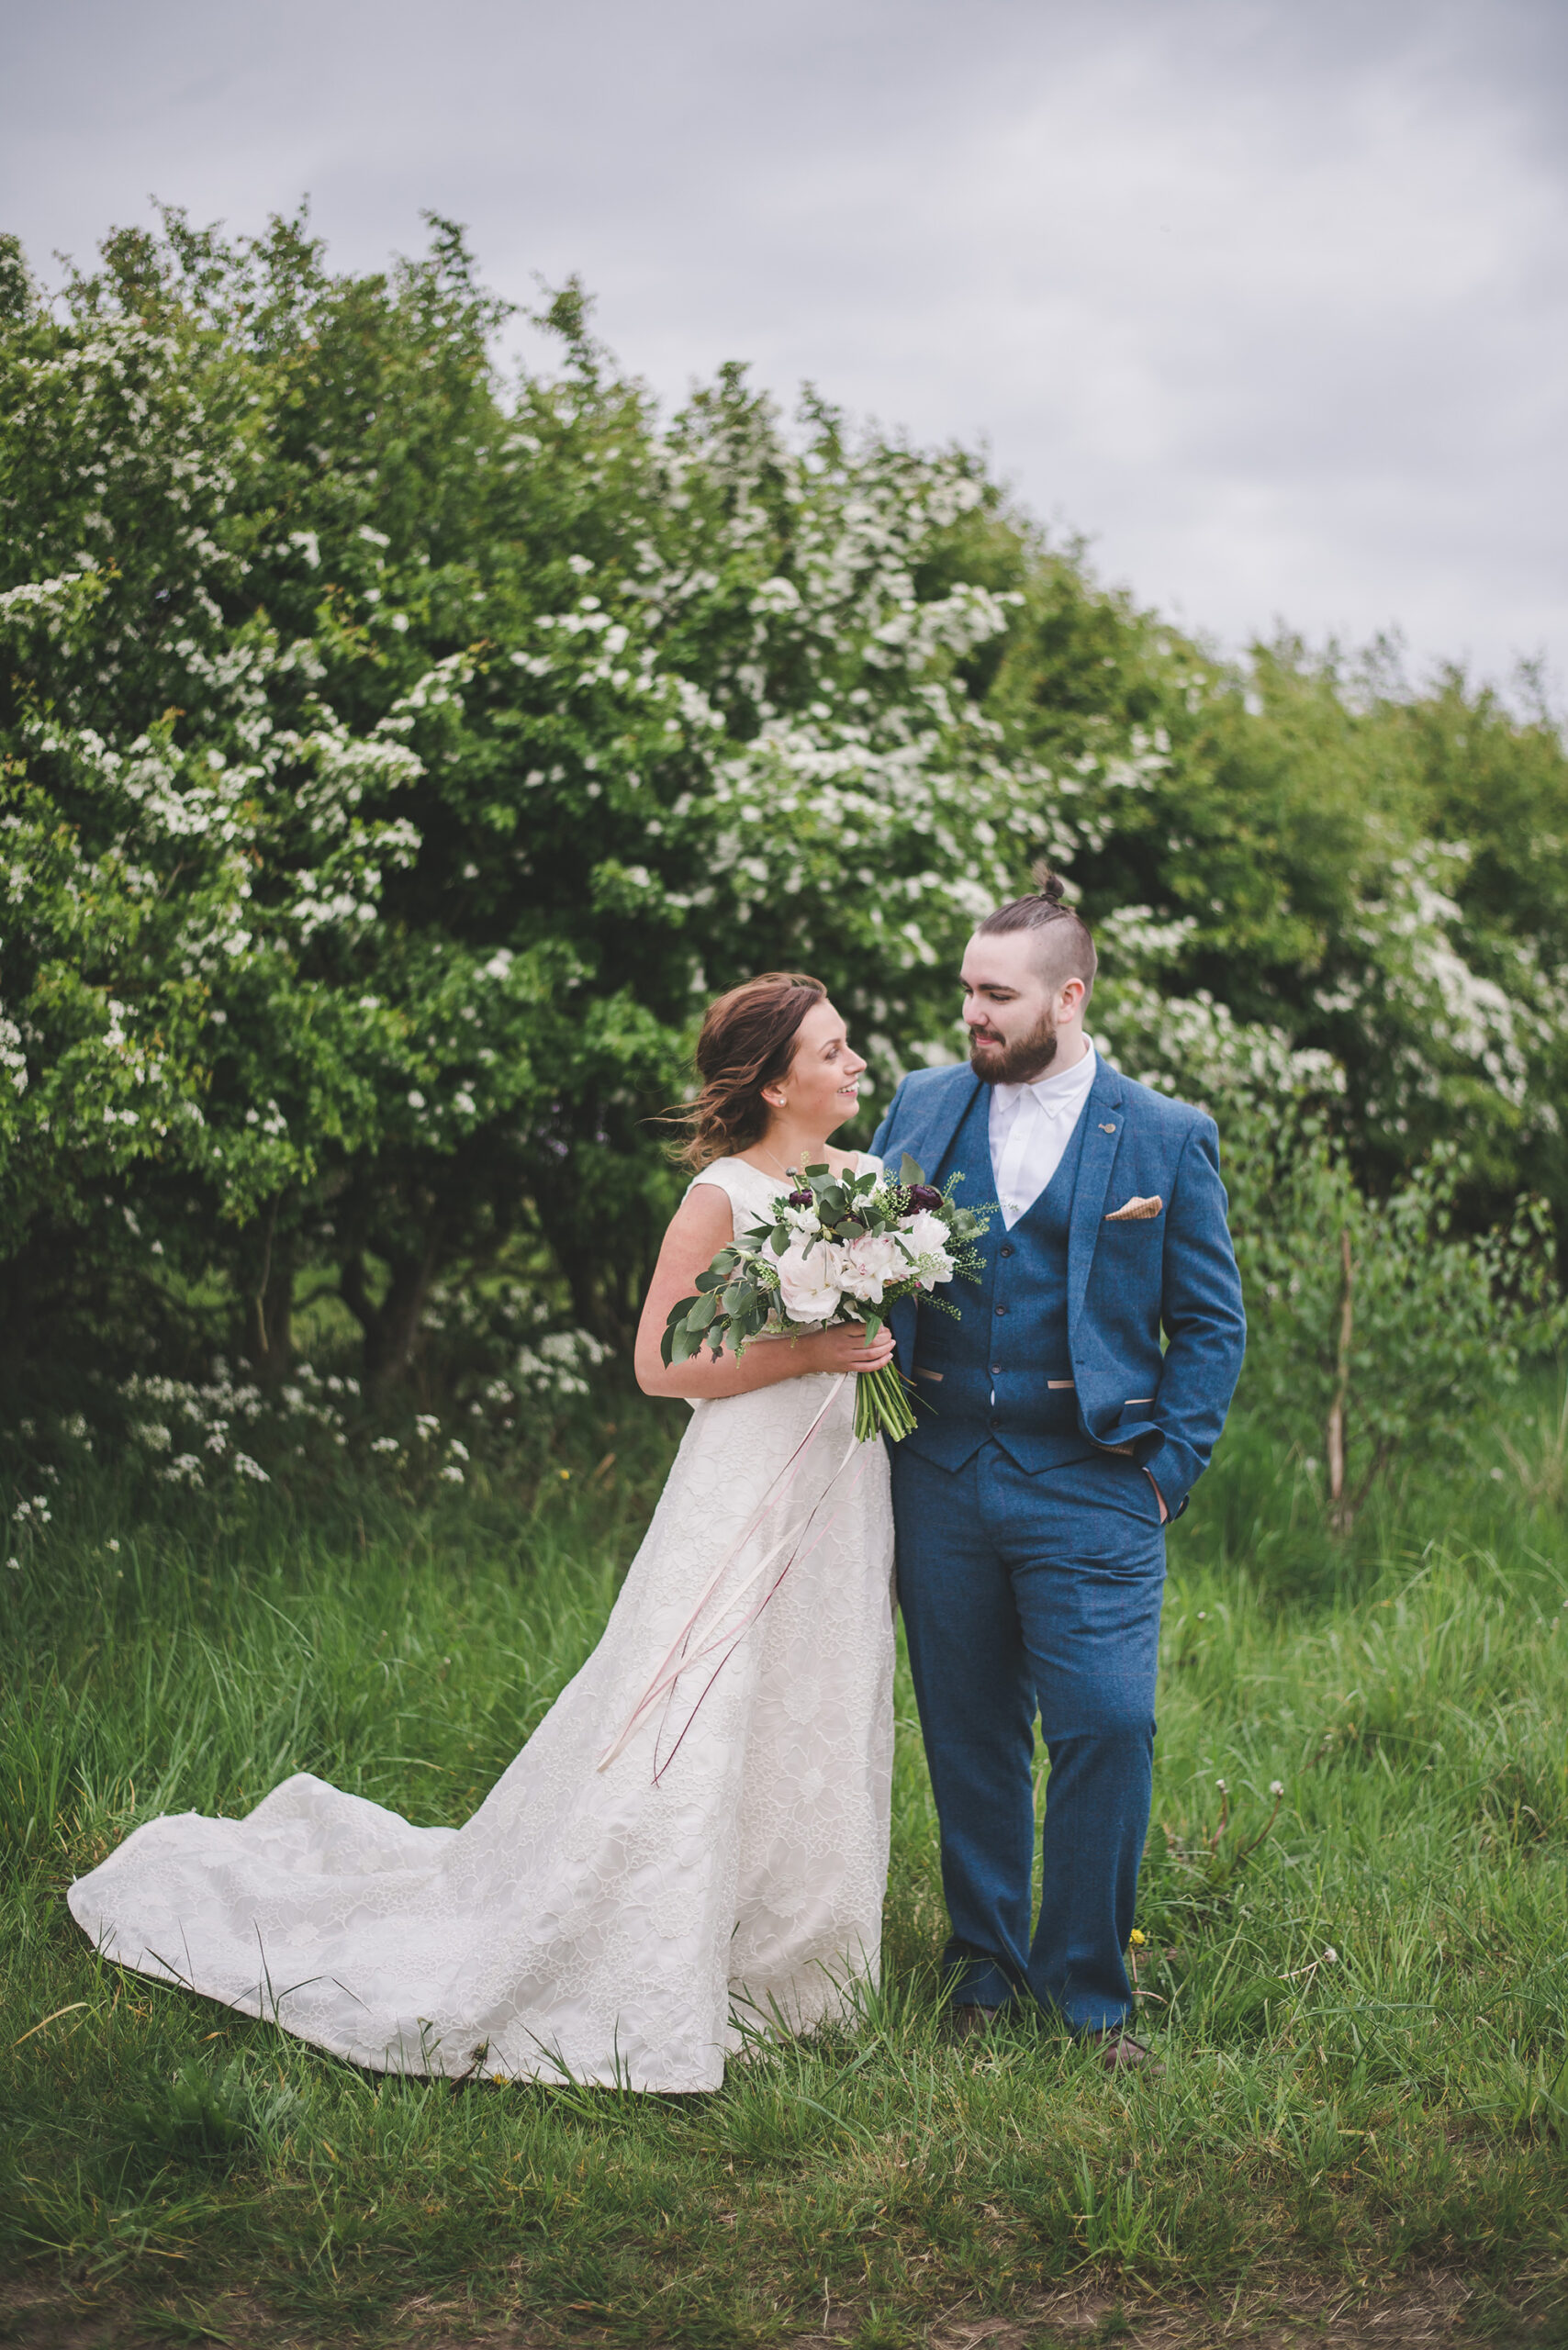 Laura_Andrew_Rustic-Homemade-Wedding_Rhi-Scotchbrook-Photography_029